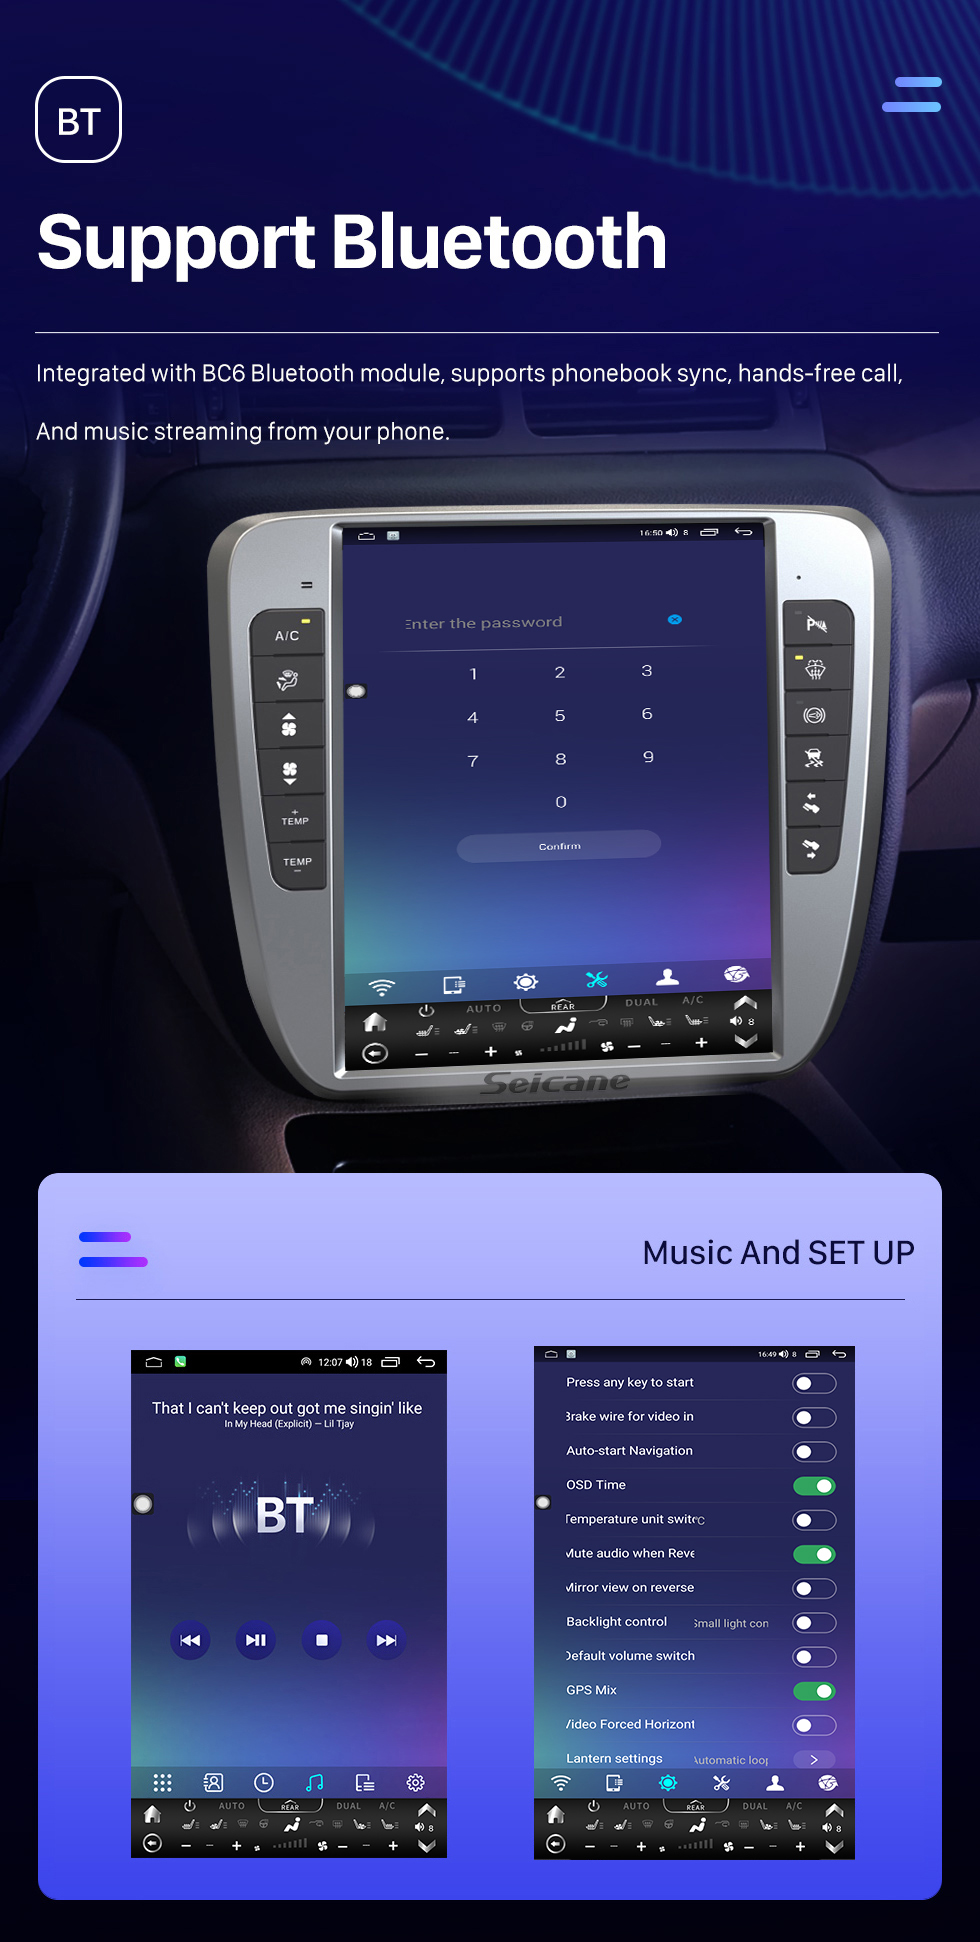 Seicane Carplay 13 polegadas Android 10.0 HD Touchscreen Android Auto GPS Navigation Radio para 2007 2008 2009-2014 Chevy Chevrolet Tahoe Silverado GMC YUkon com Bluetooth